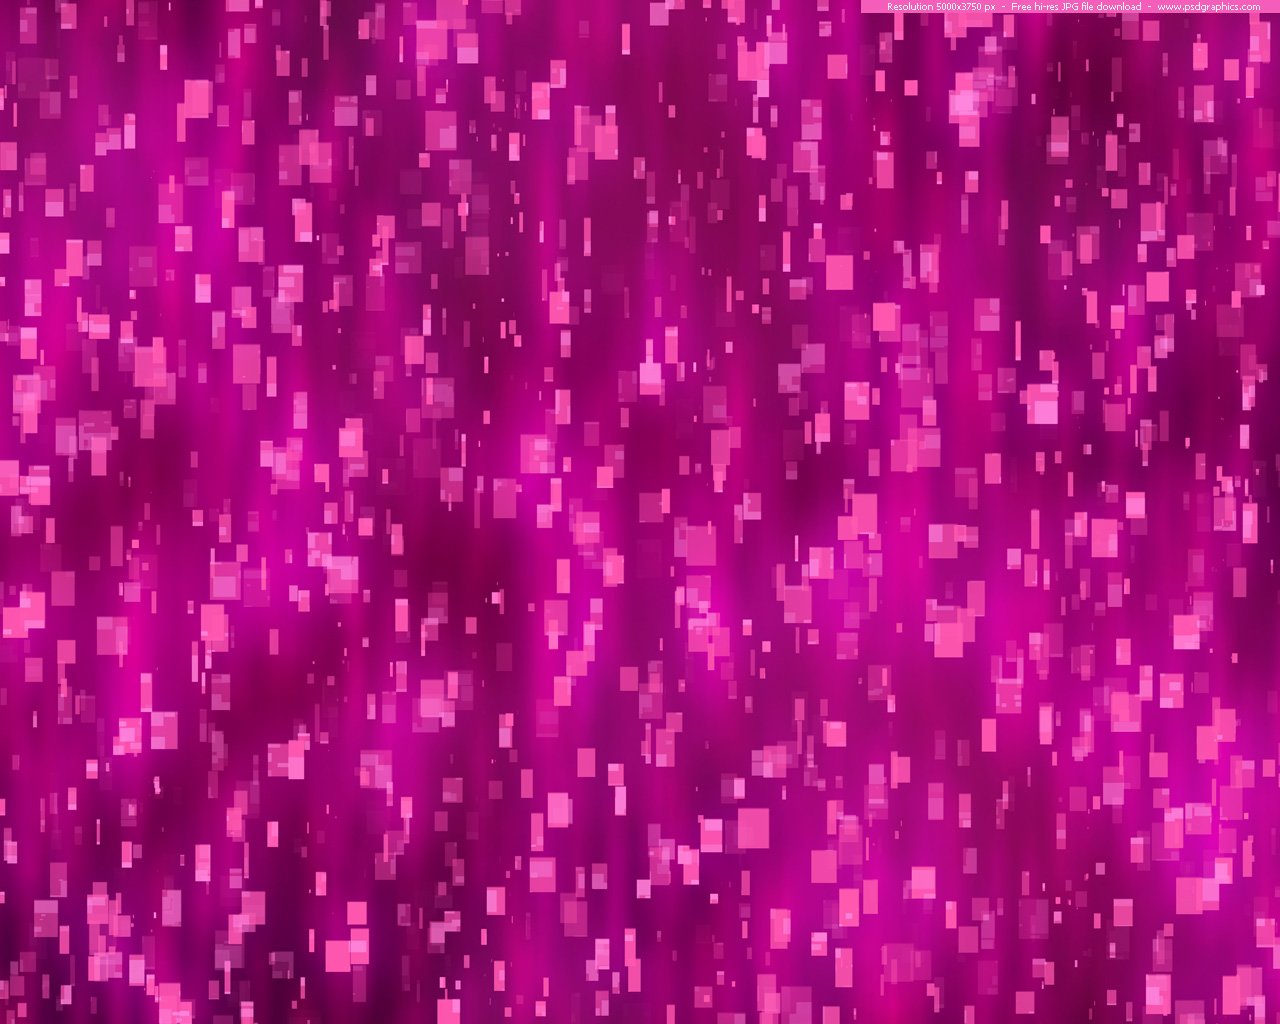 pink blurry lights background